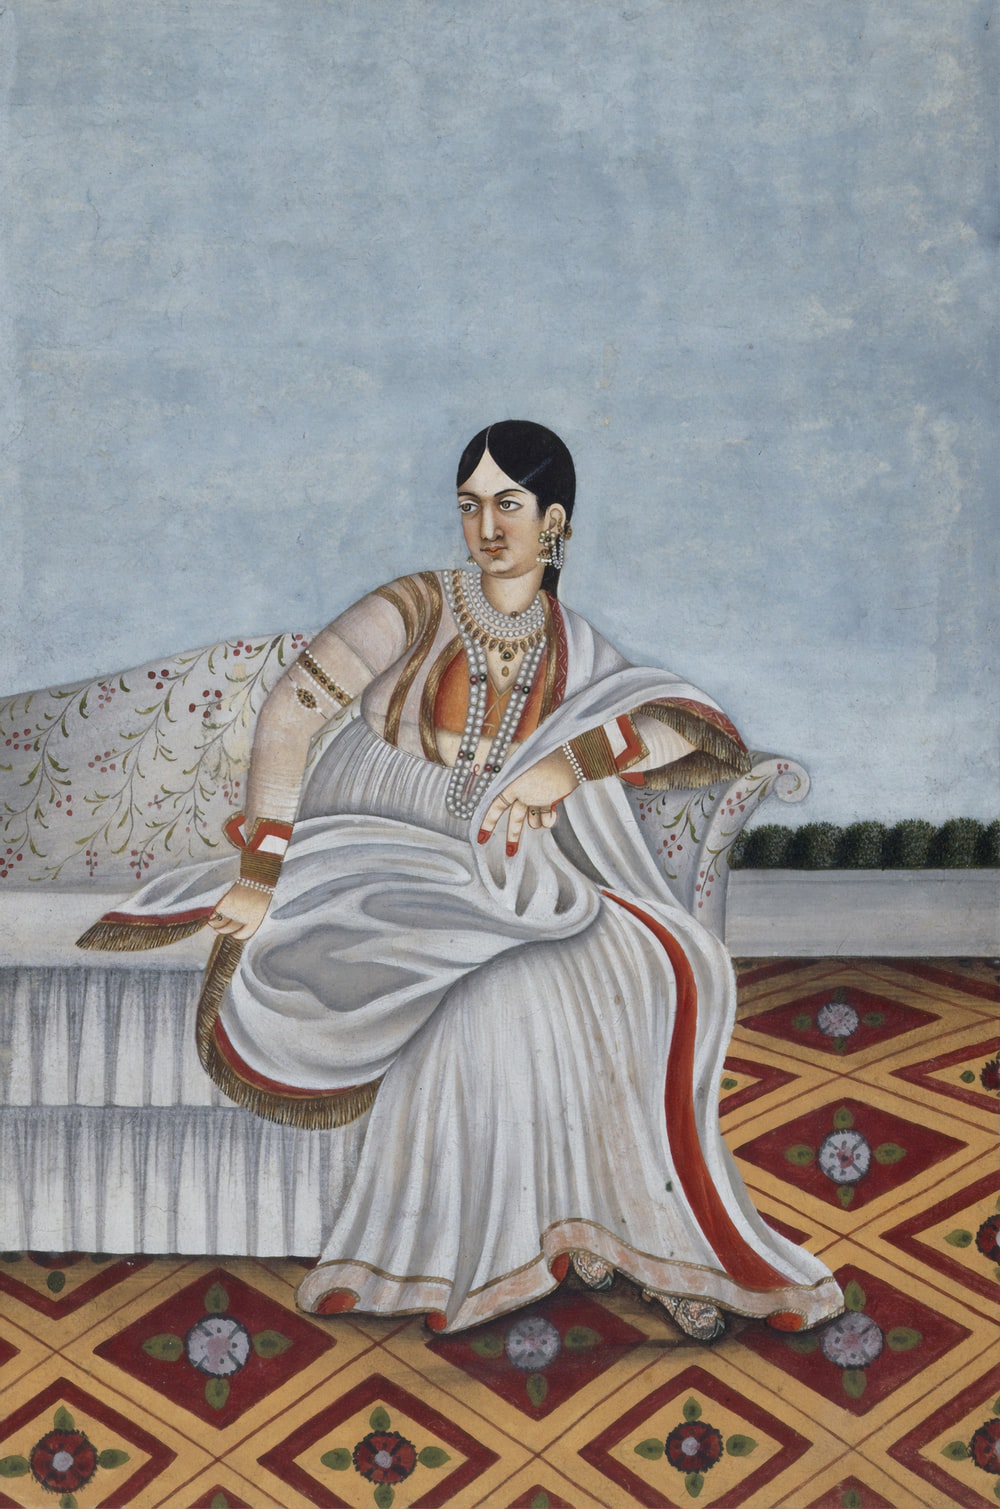 Indian Art Wallpapers